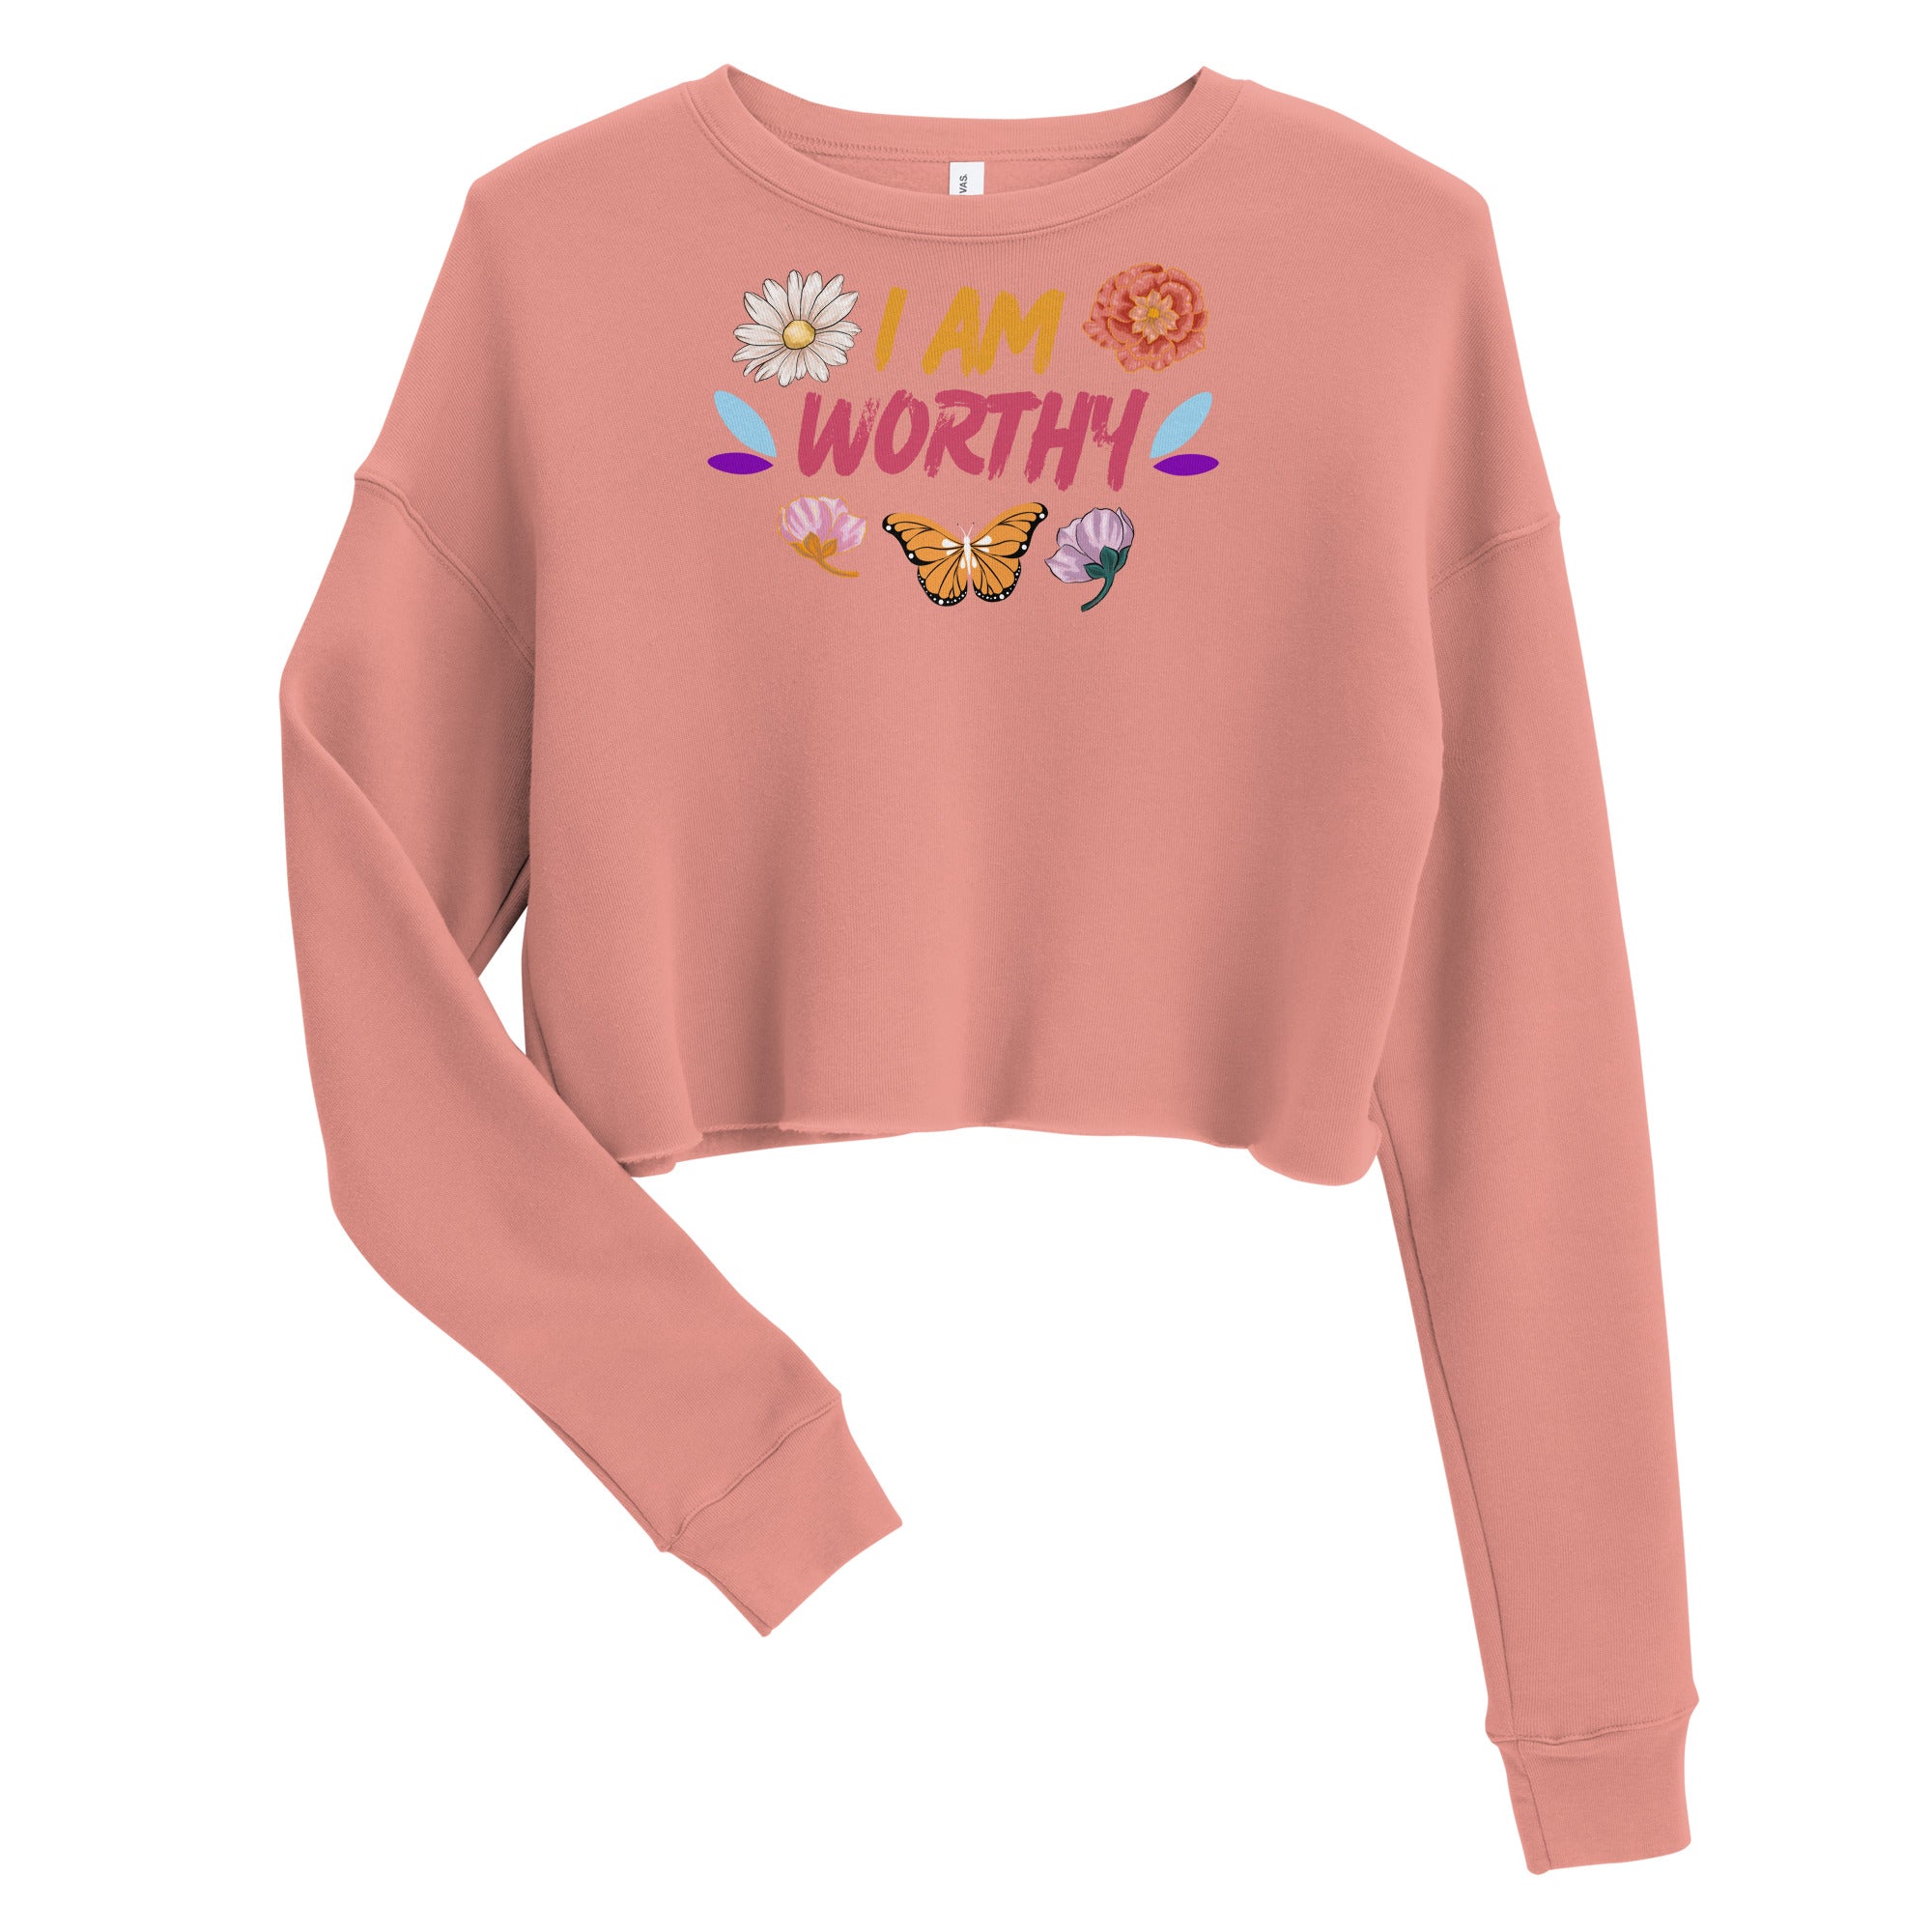 I Am Worthy Crop Sweatshirt